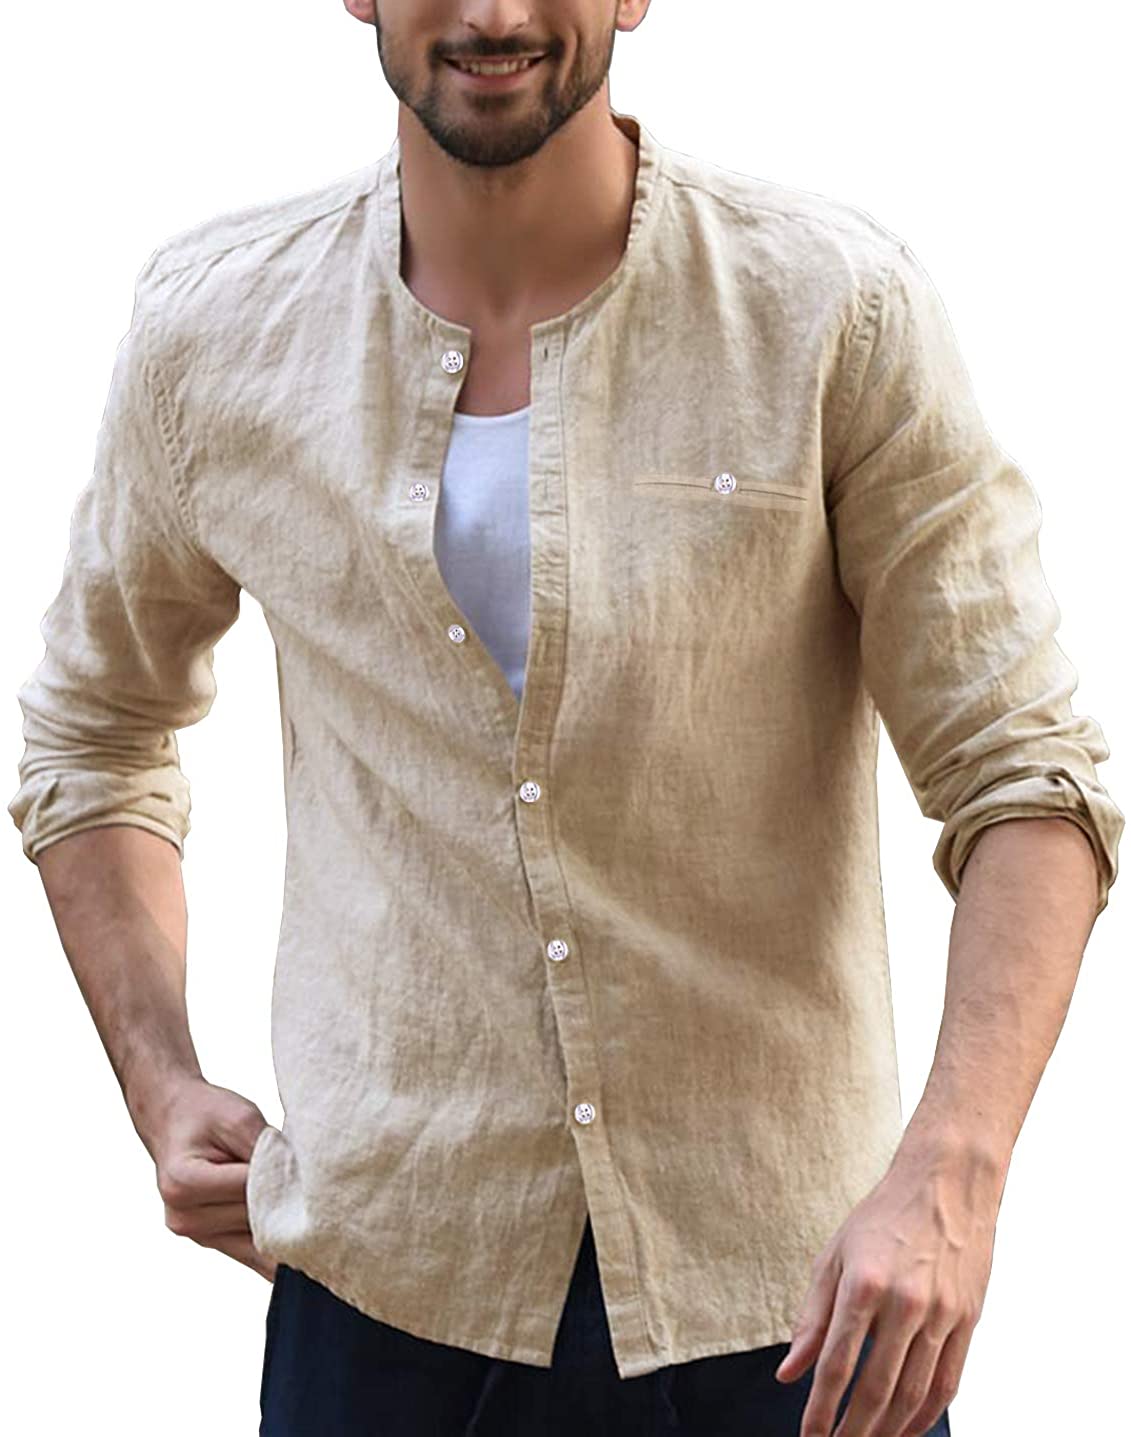 URRU Mens Line Short Sleeve Cotton Summer Casual Beach Slim Fit Henley Fashion Shirt with Front Pocket S-XXL 